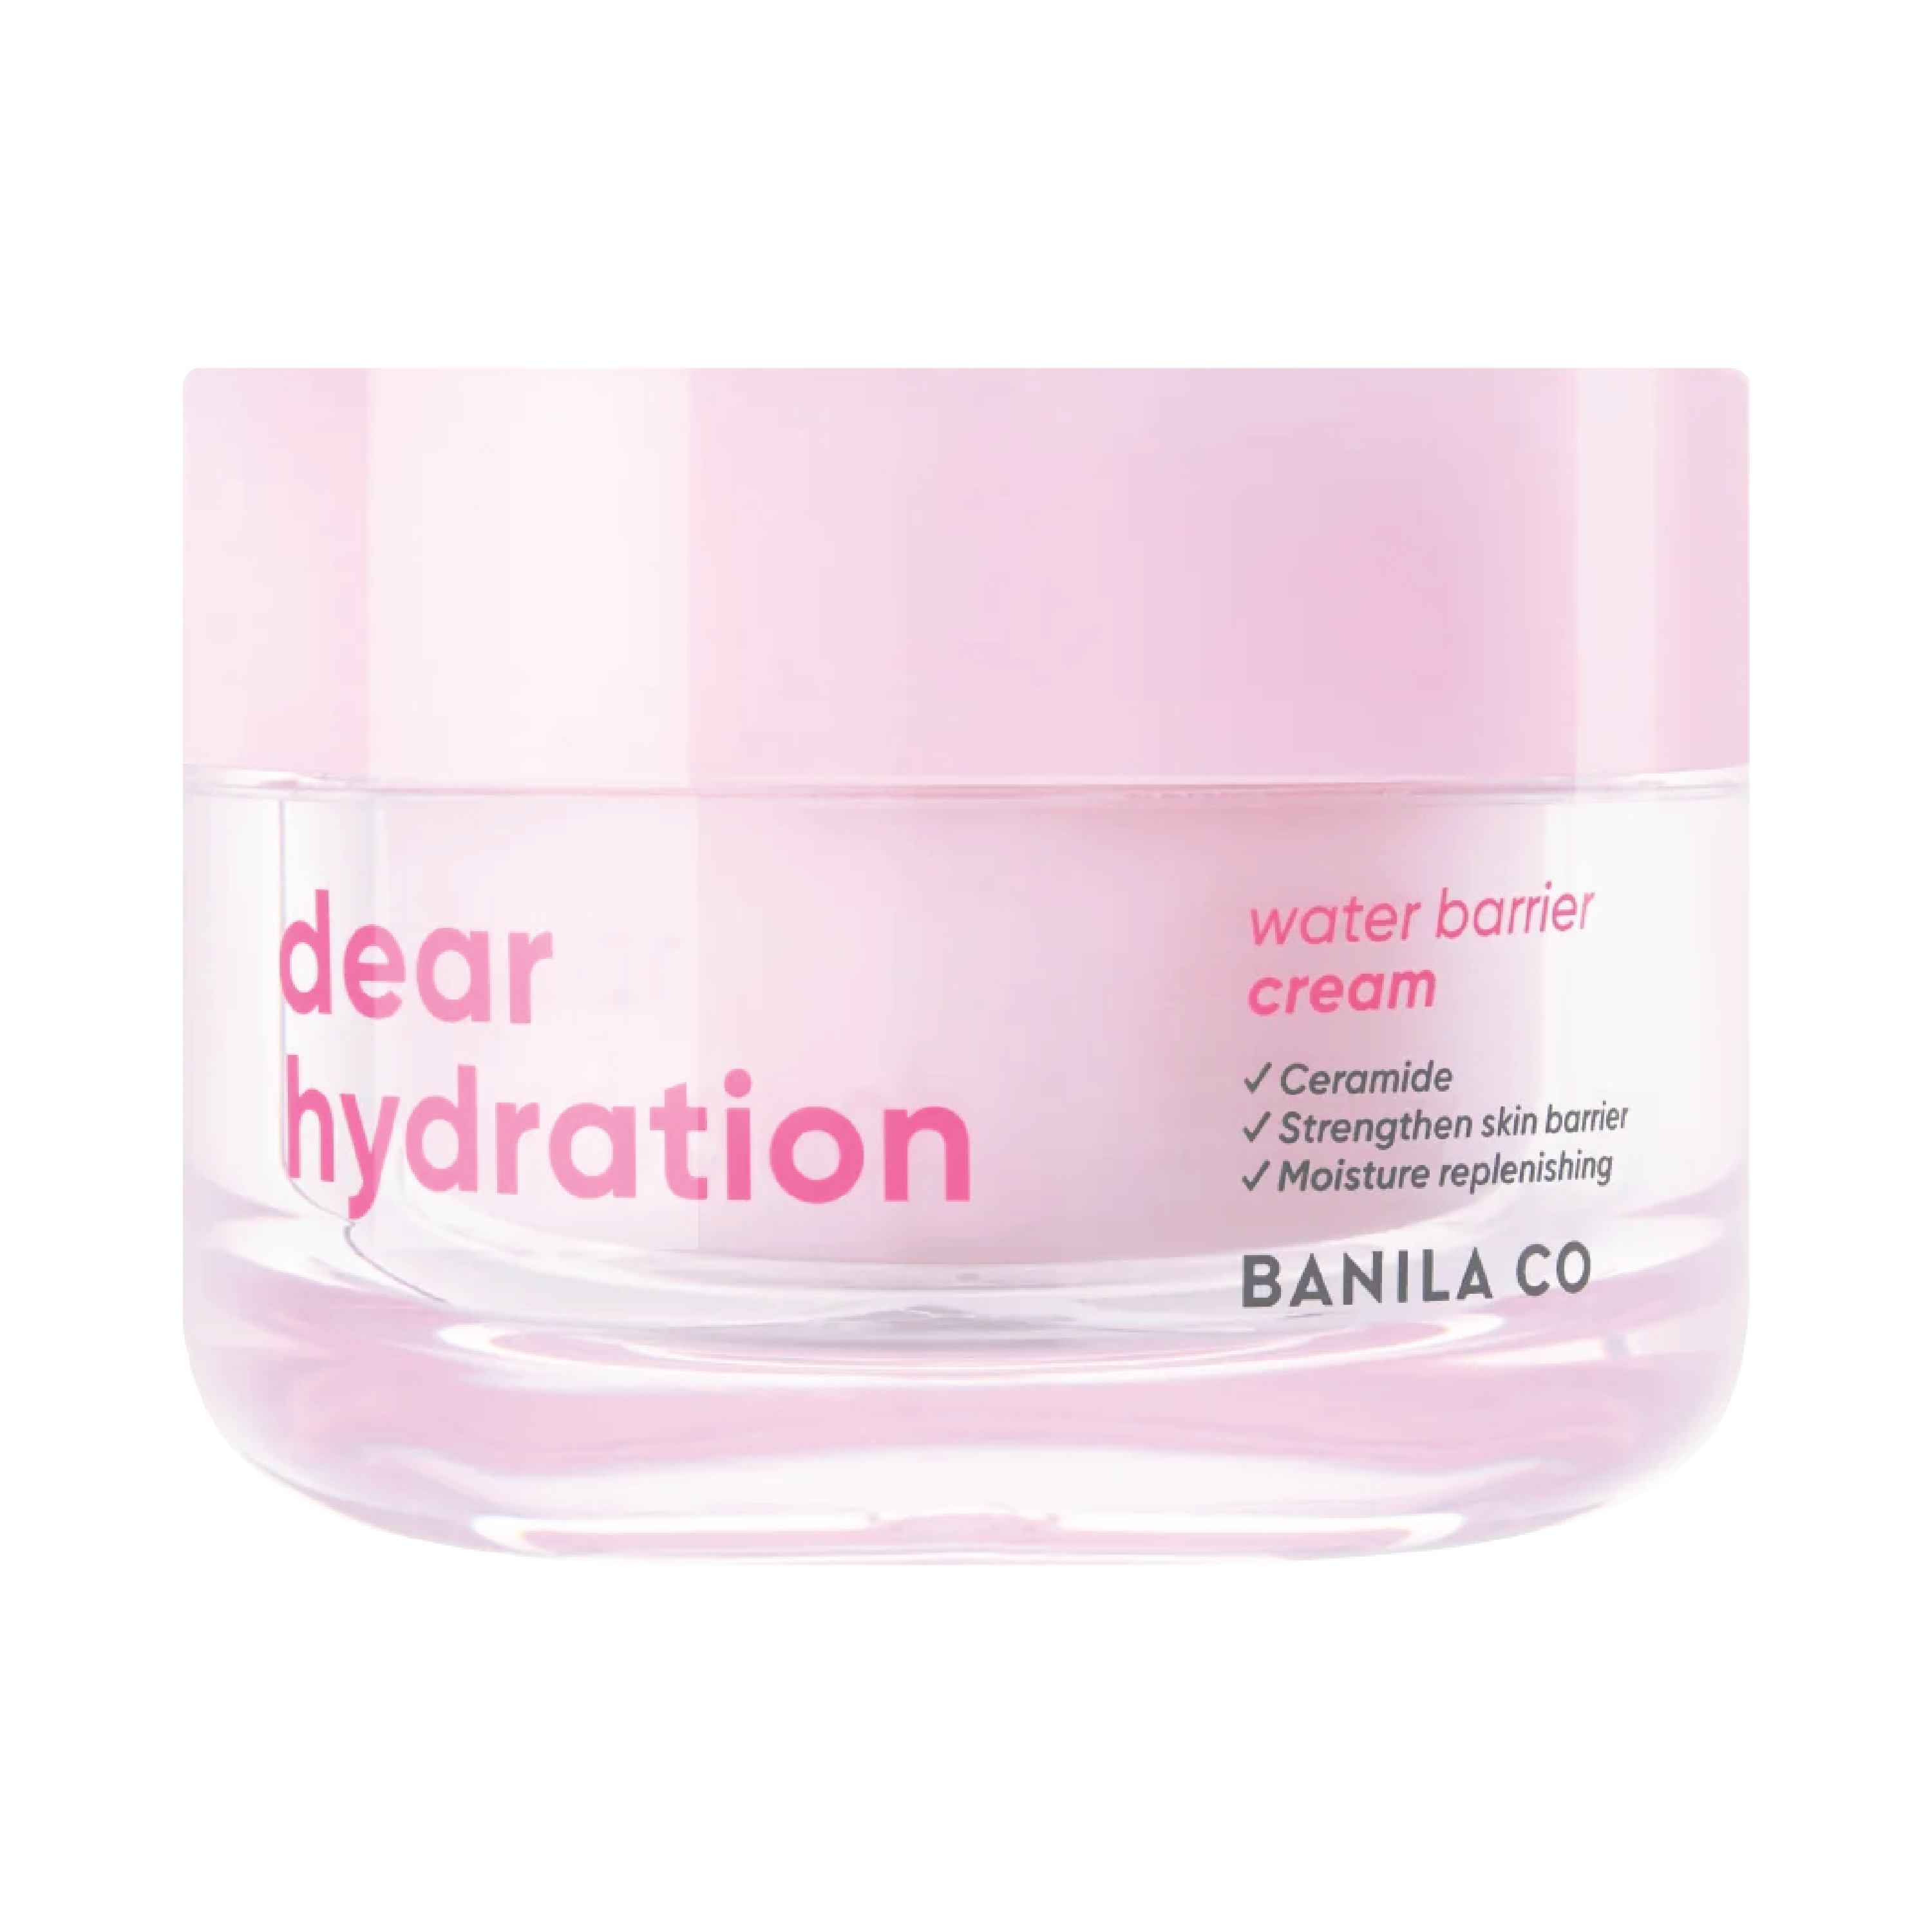 Banila Co Dear Hydration Water Barrier Cream, 50 ml